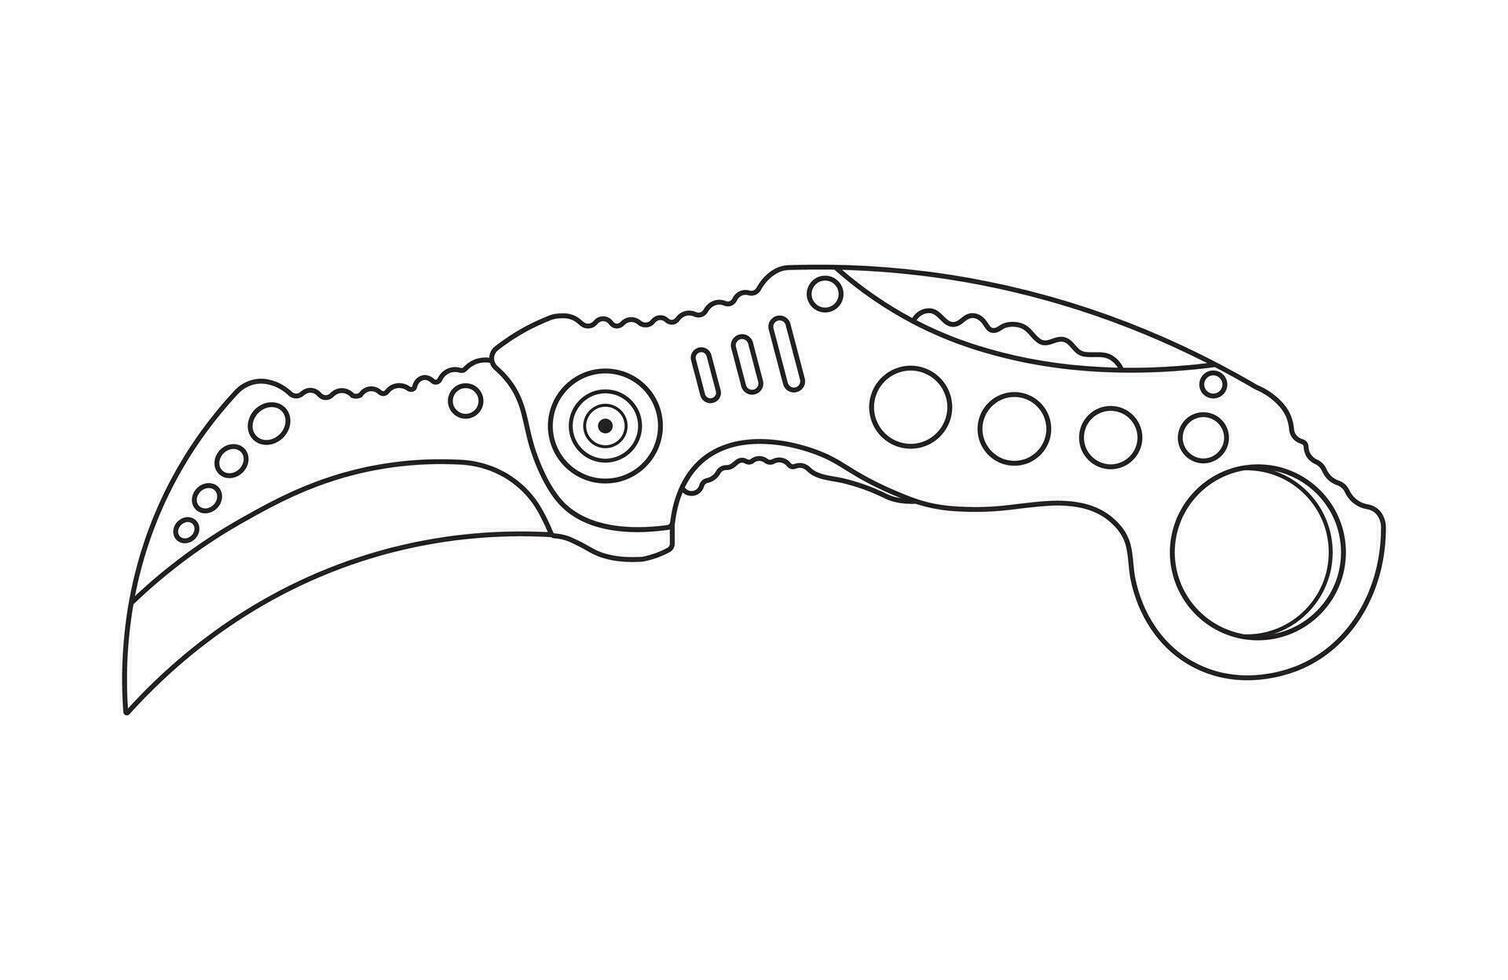 mano dibujado niños dibujo dibujos animados vector ilustración Karambit plegable cuchillo aislado en garabatear estilo